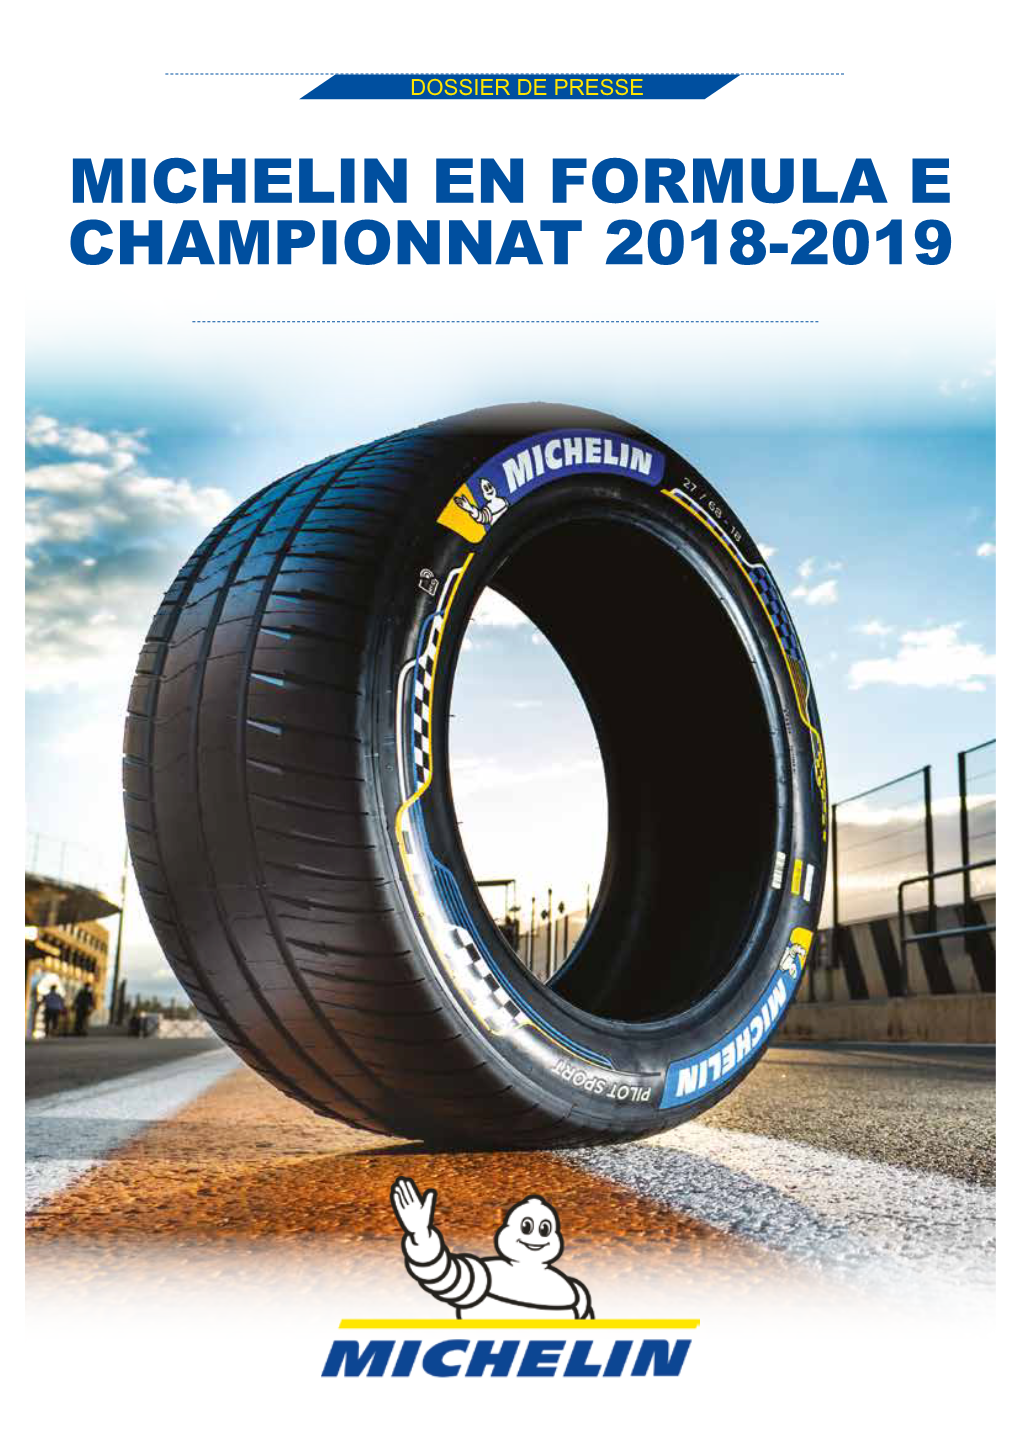 Michelin En Formula E Championnat 2018-2019 Edito La Formula E Source D’Innovation Et De Progrès